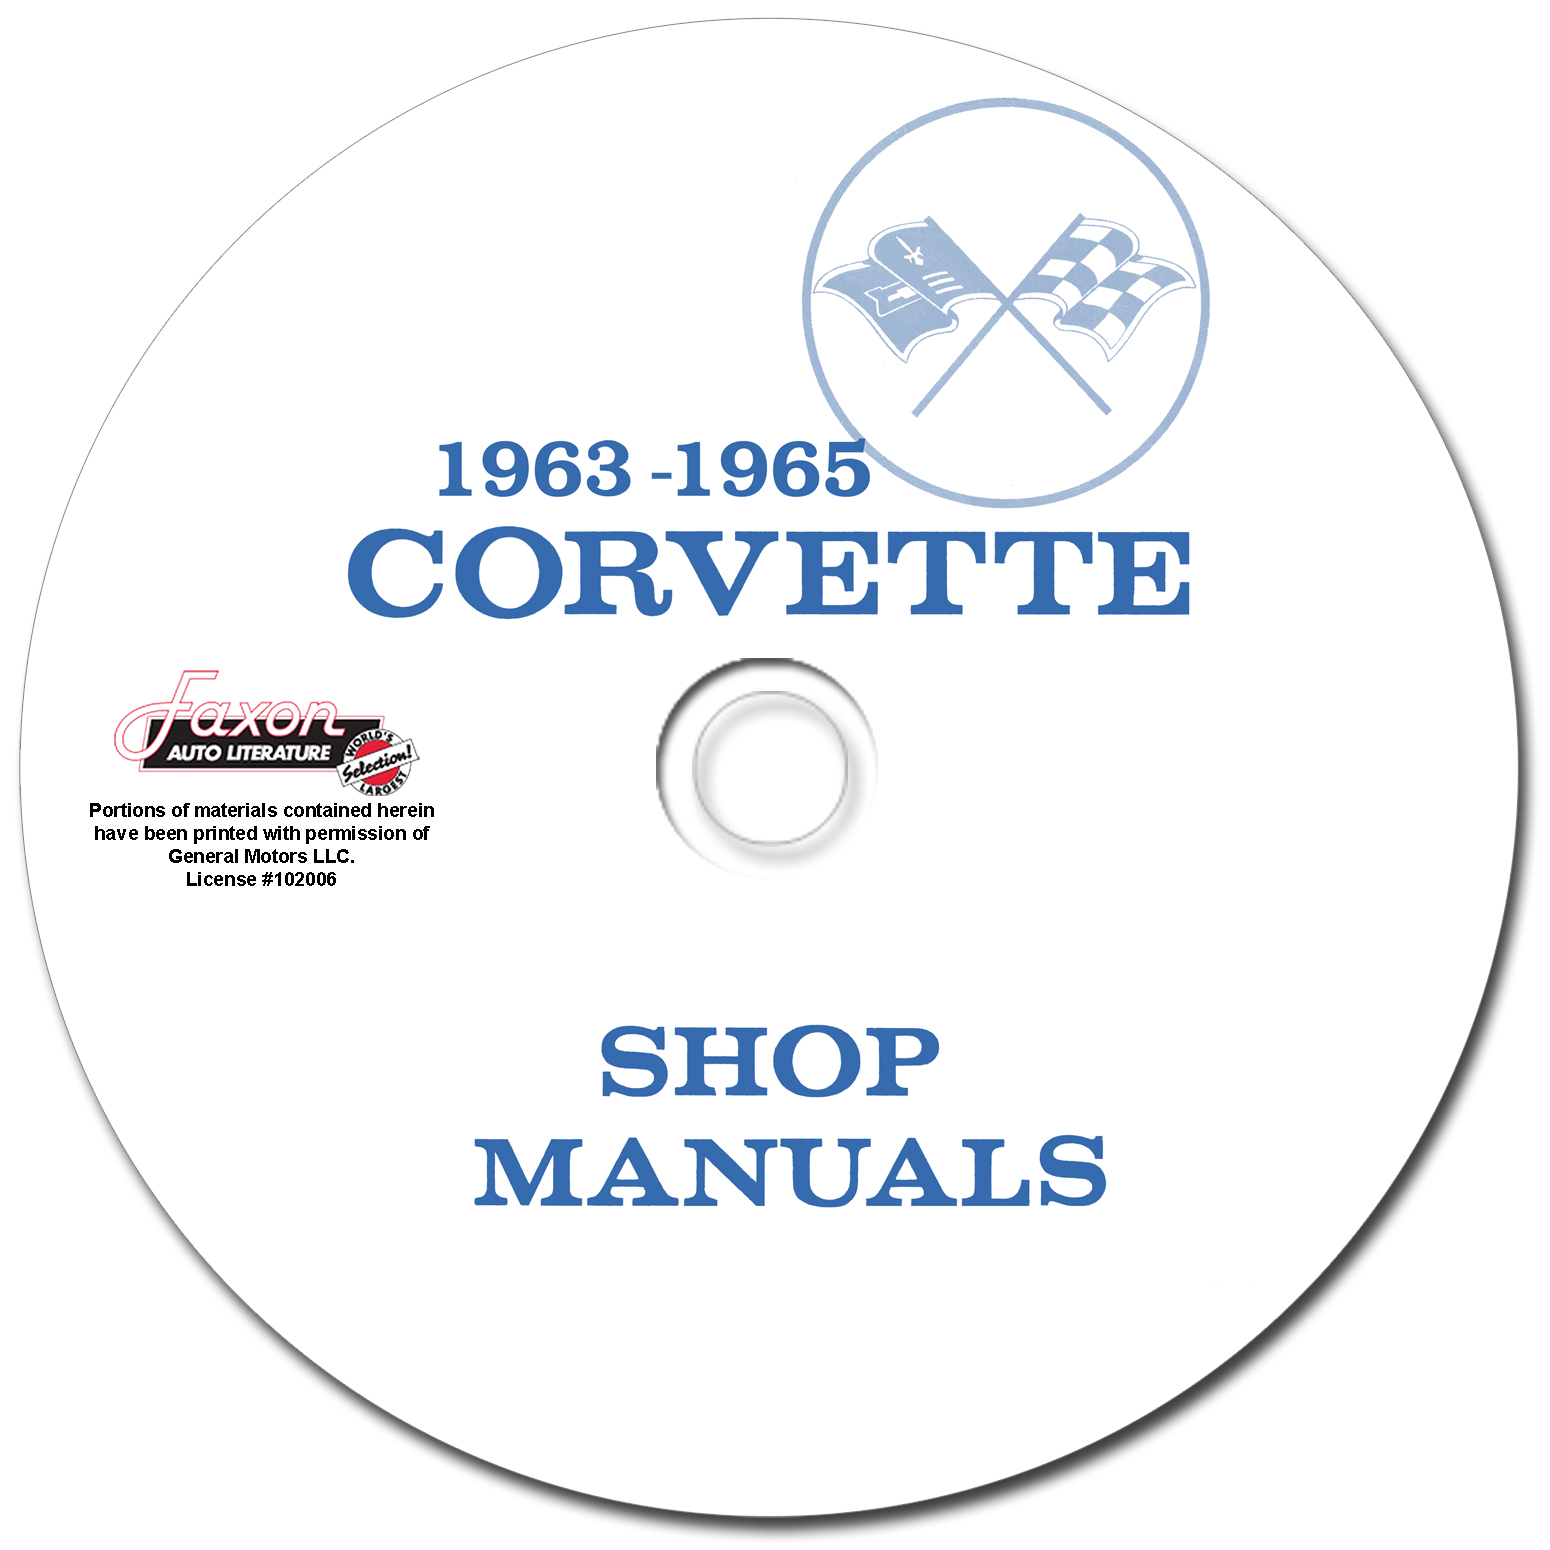 1963-1965 Chevrolet Corvette Repair Shop Manual Set on CD-ROM